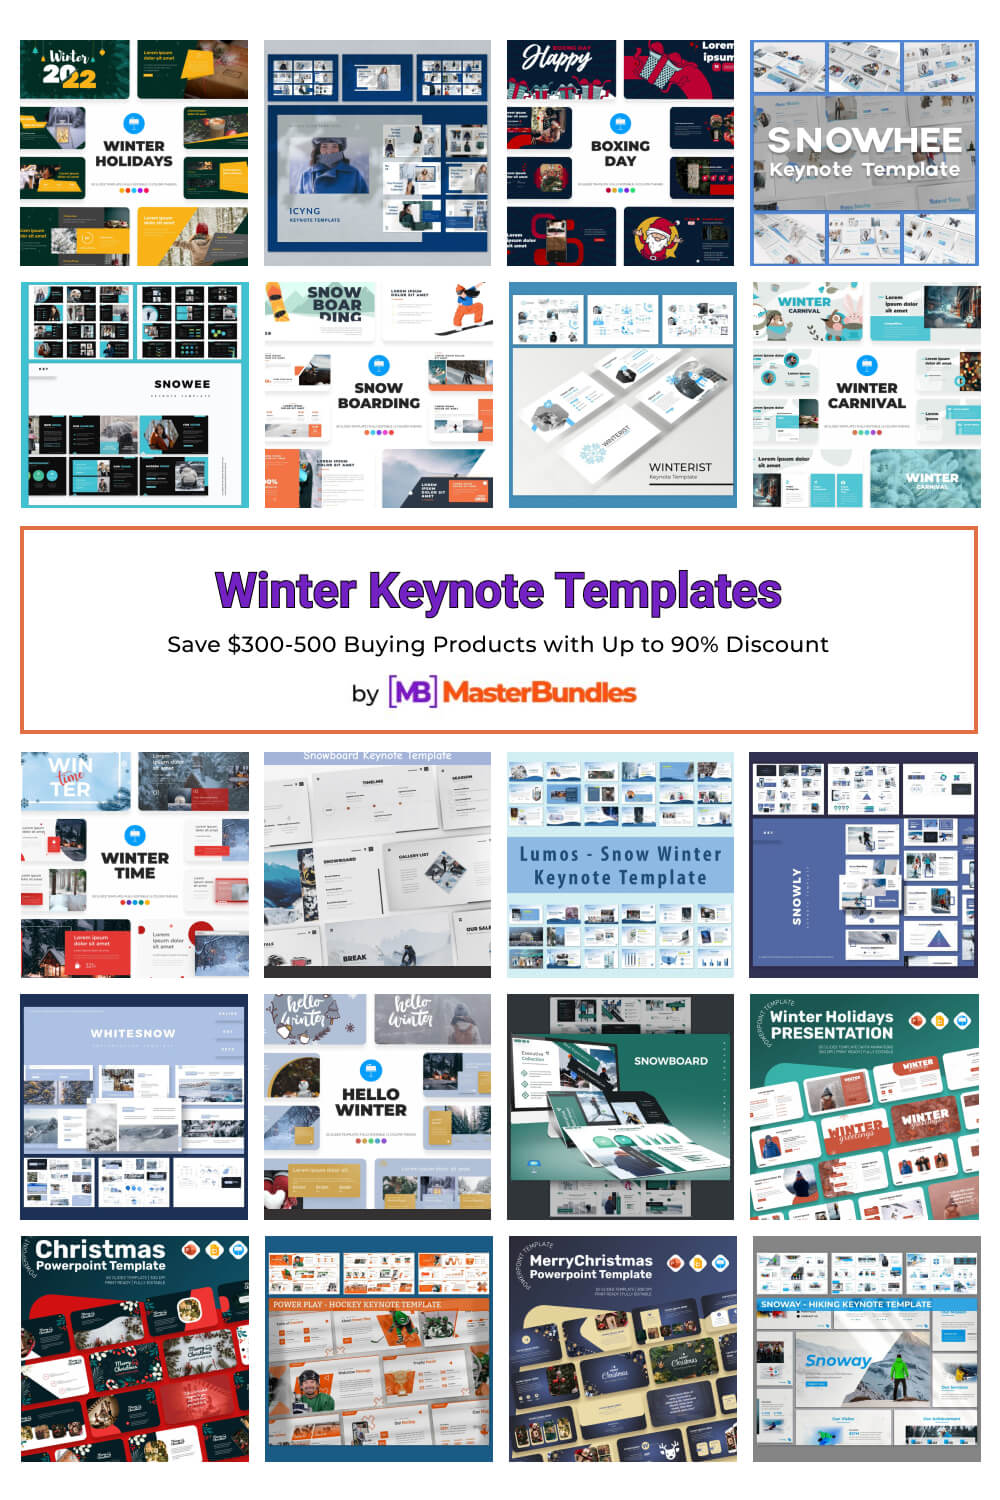 winter keynote templates pinterest image.